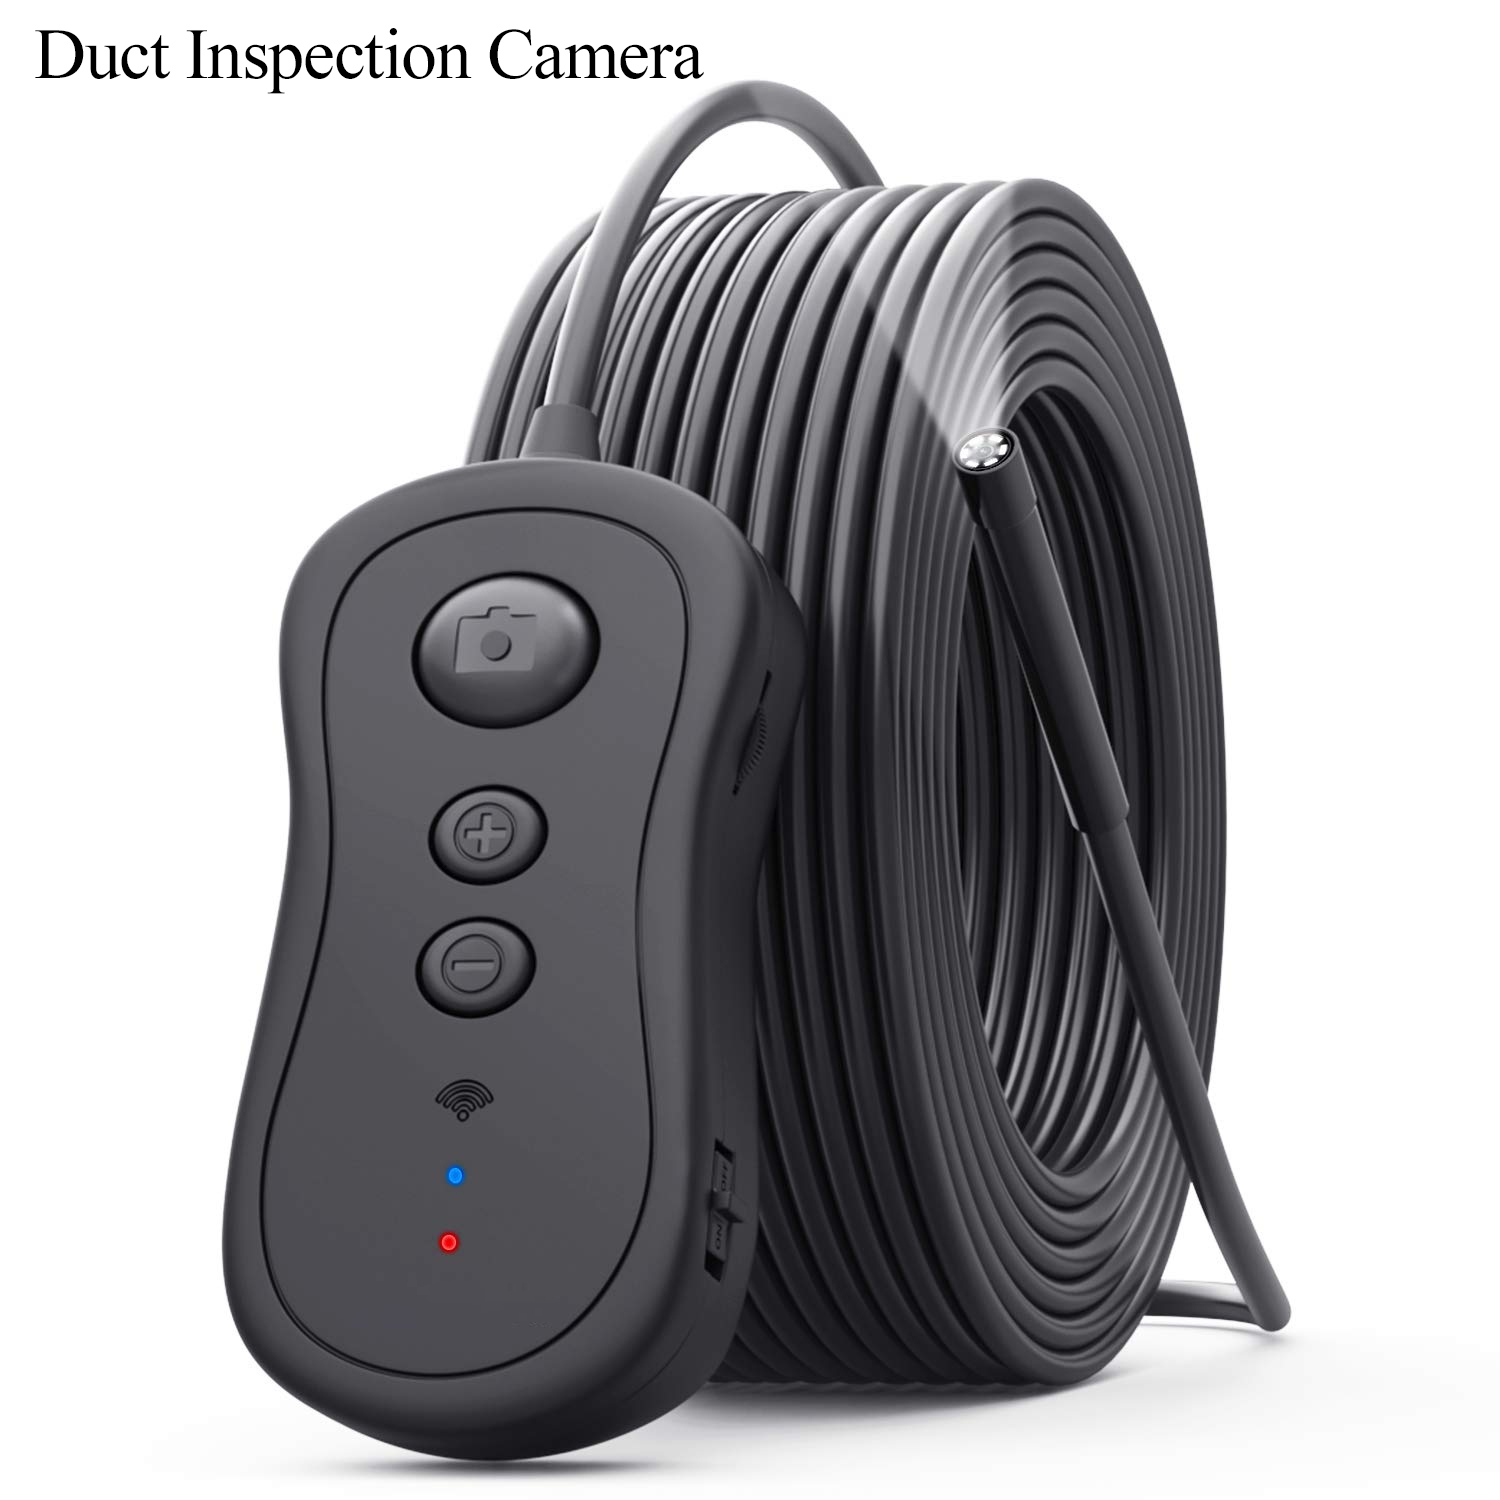 Duct Inspection Camera - Magic Wand Company